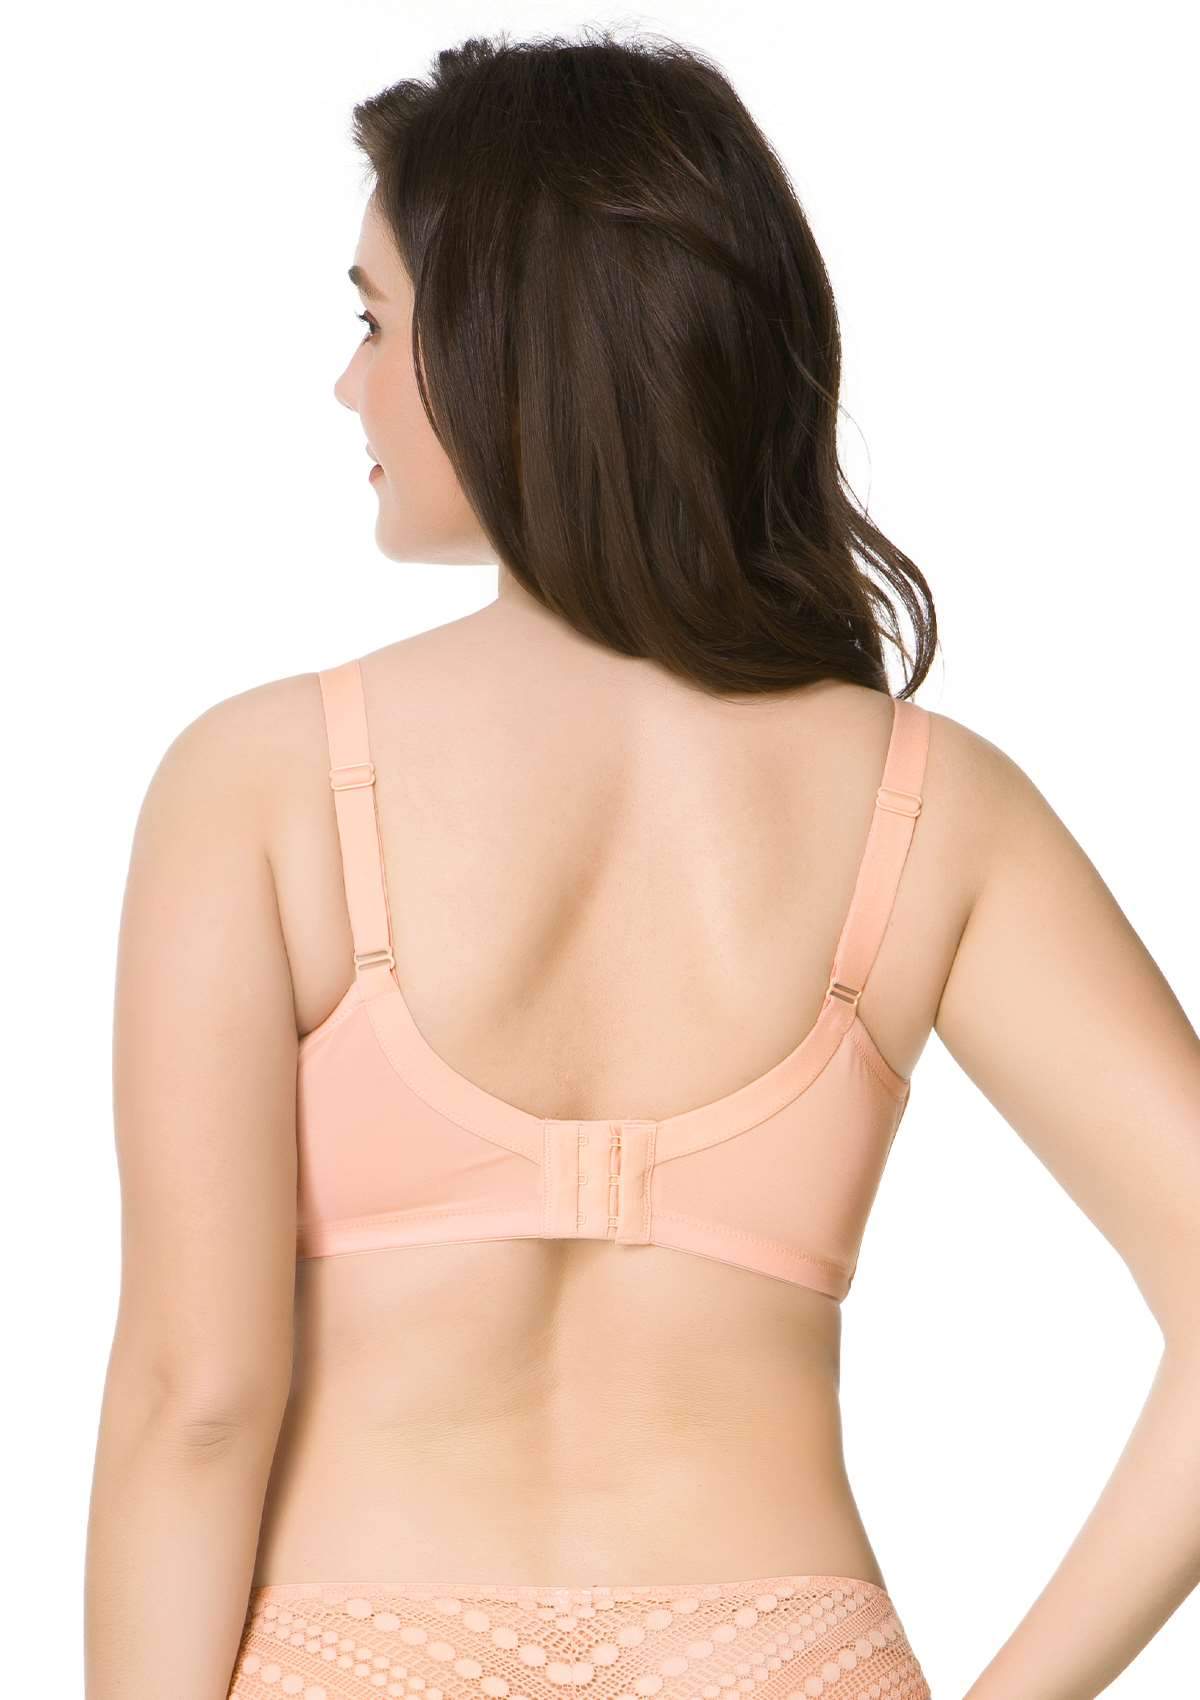 HSIA Heroine Lace Bra And Panty: Best Full Figure Minimizer Bra - Rose Cloud / 44 / C